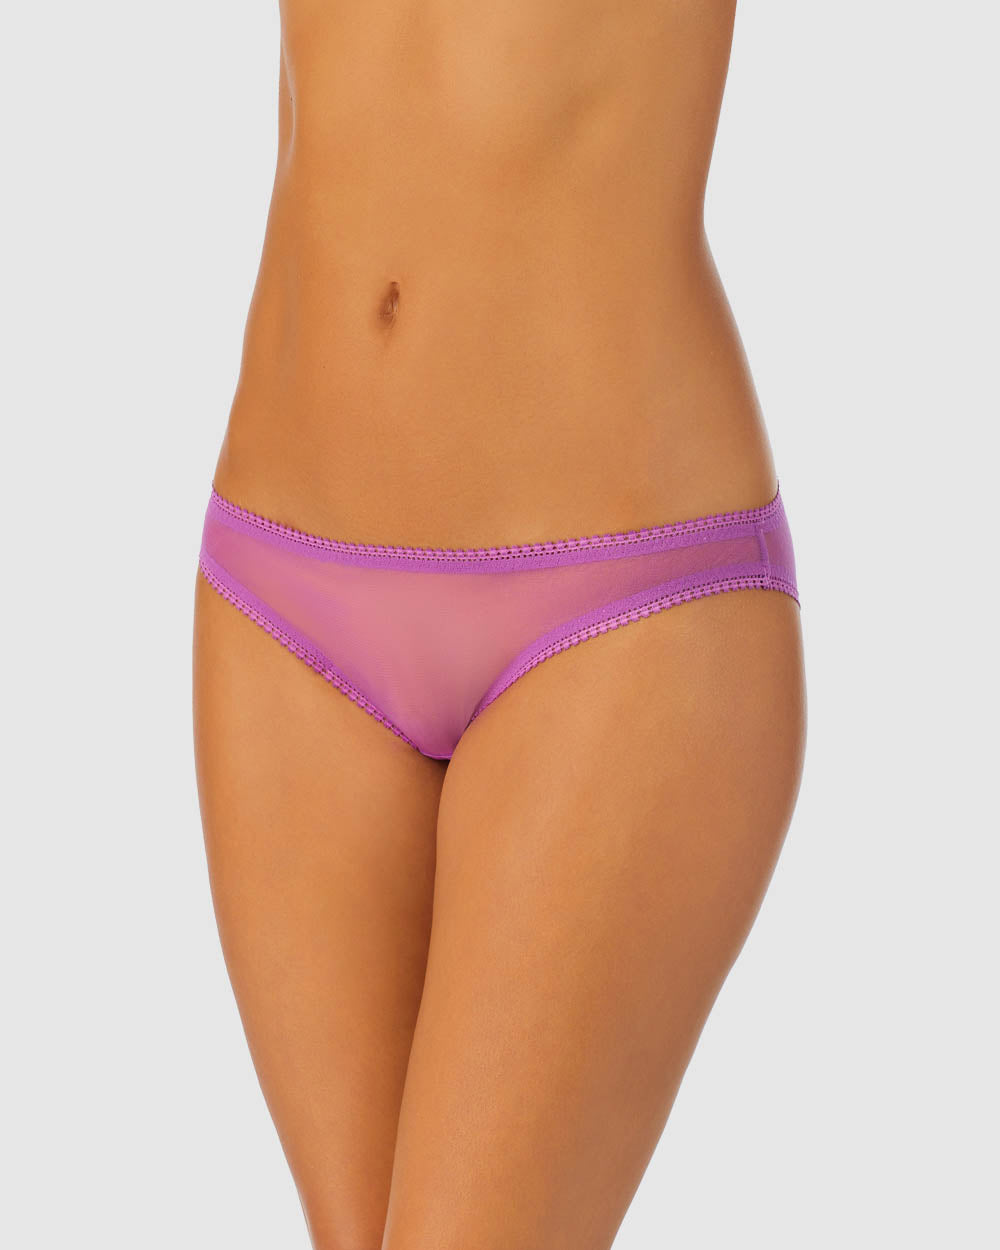 A lady wearing striking purple gossamer mesh hip g underwear.